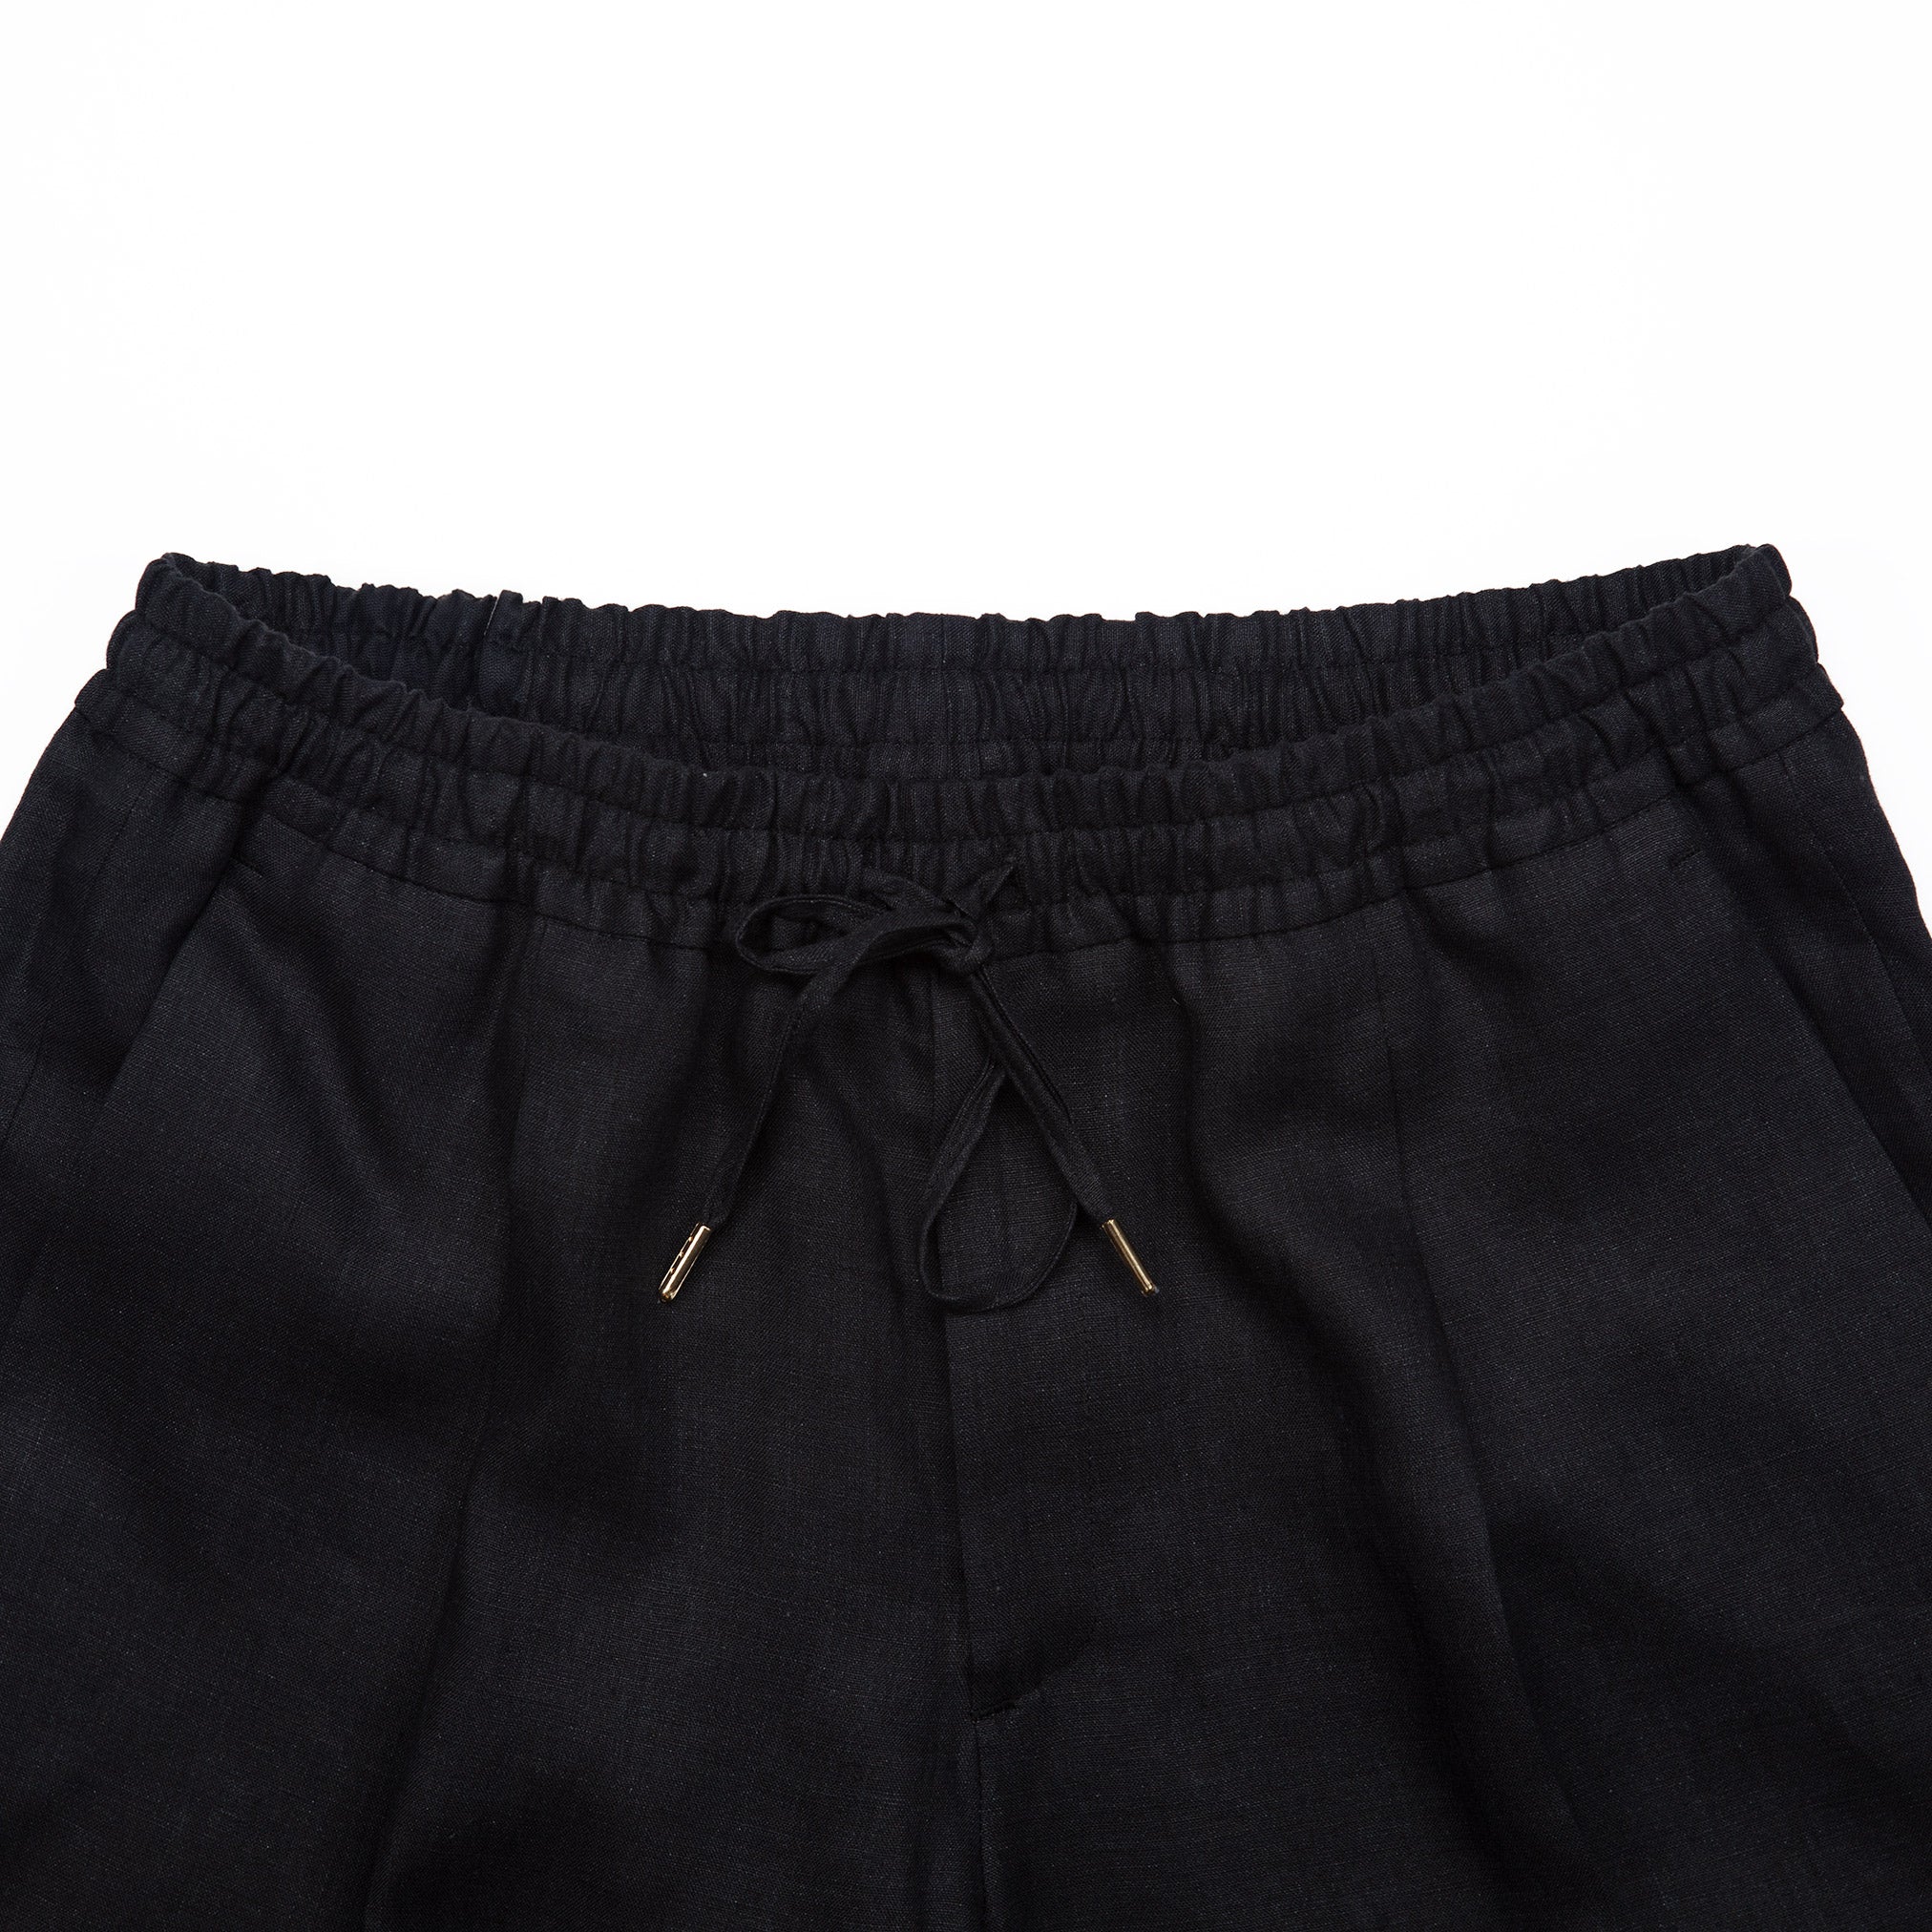 Wimbledon Pants in Black Linen